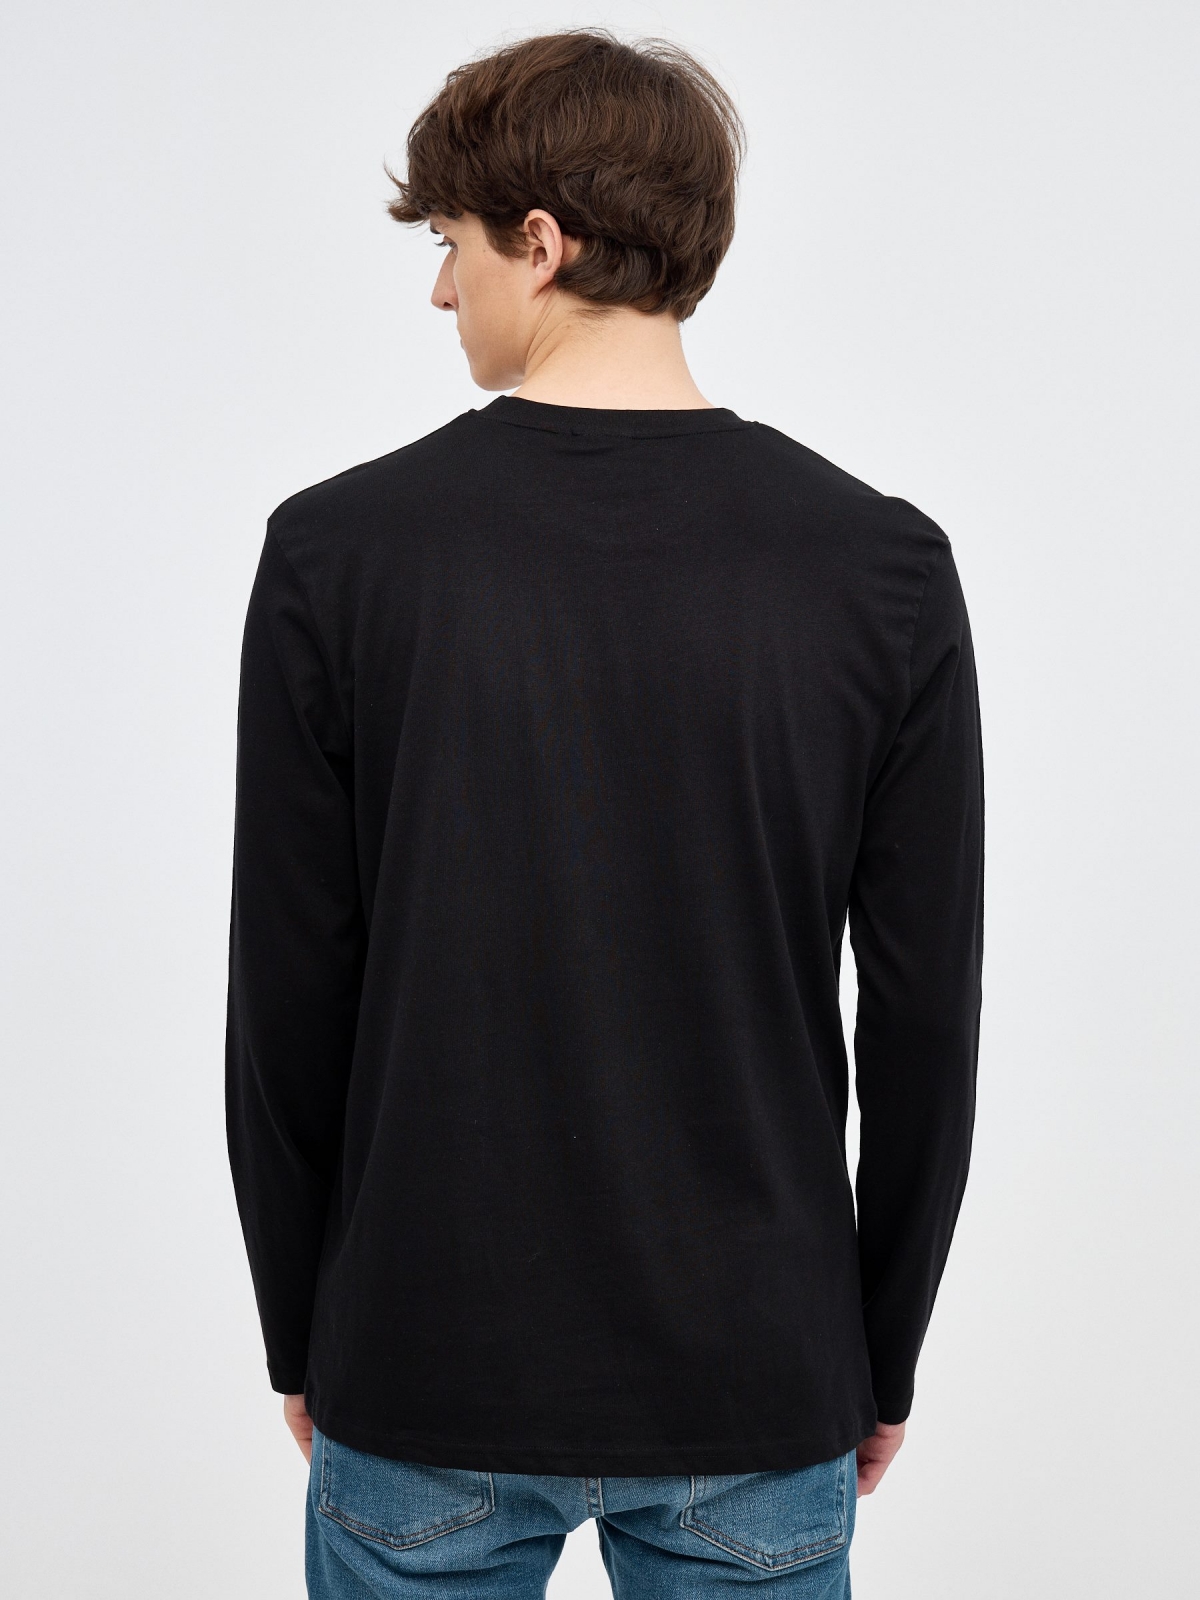 T-shirt Gragon Ball preto vista meia traseira